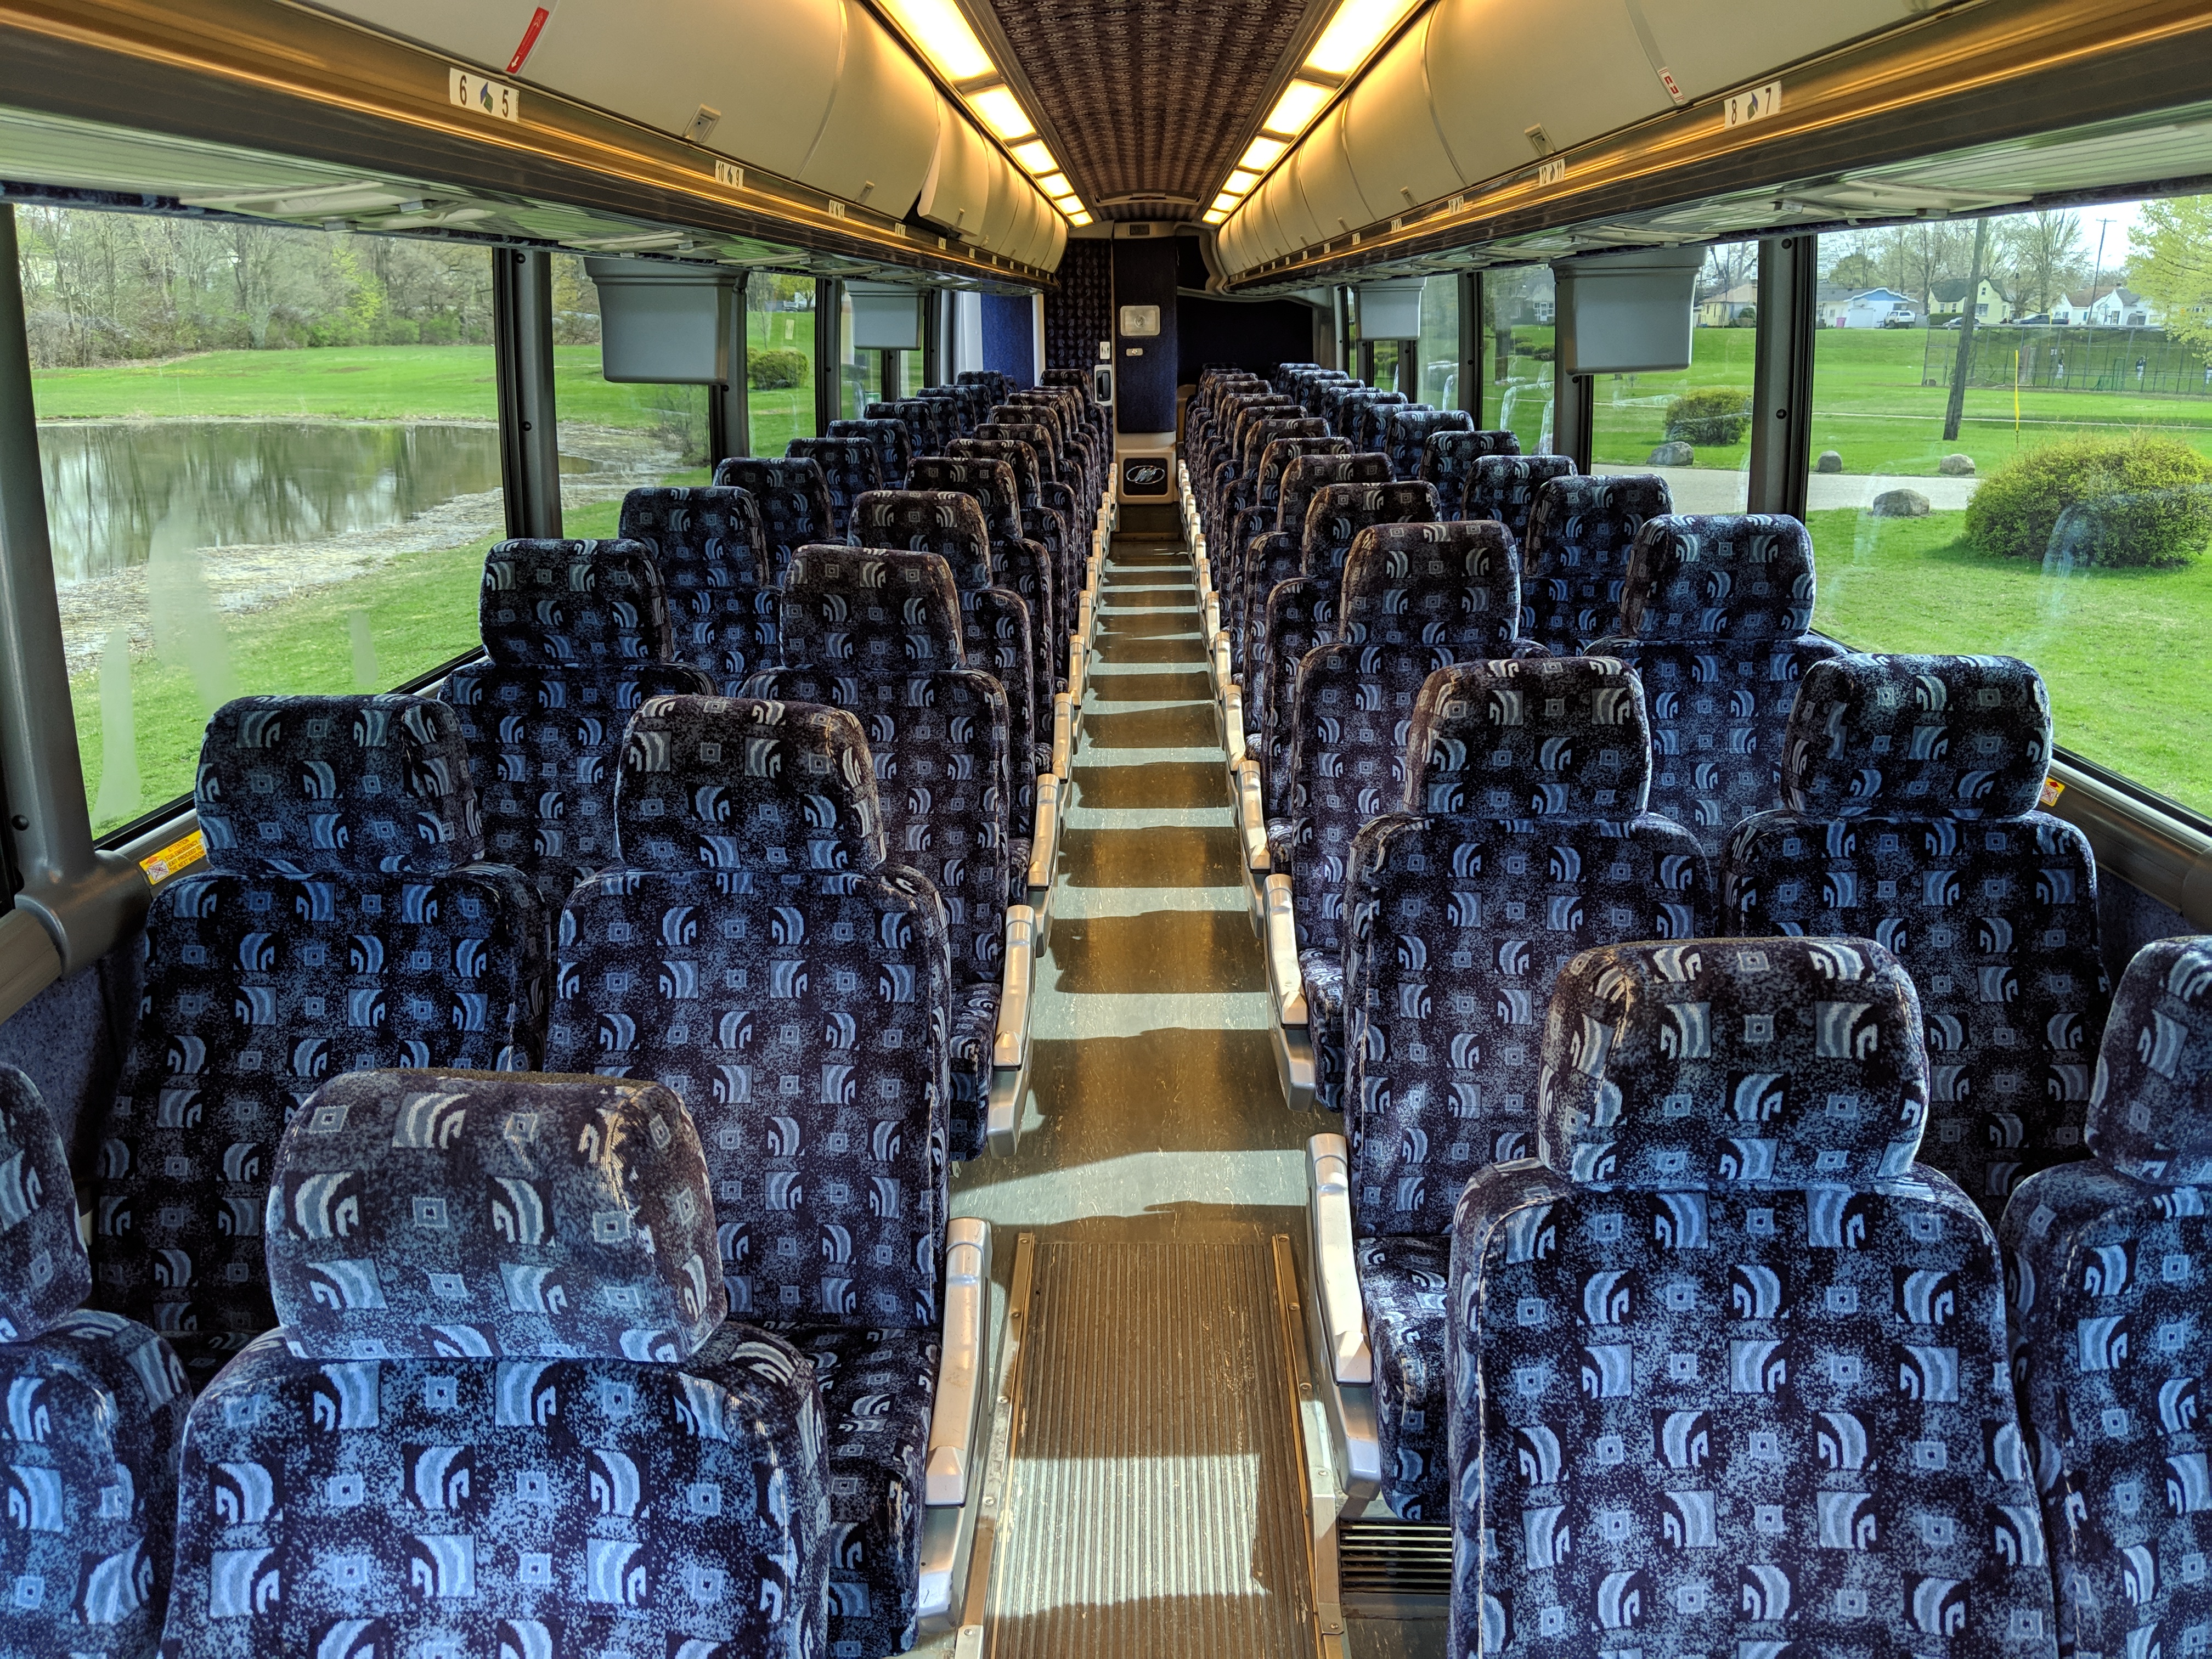 56 Passenger Motorcoach Interior